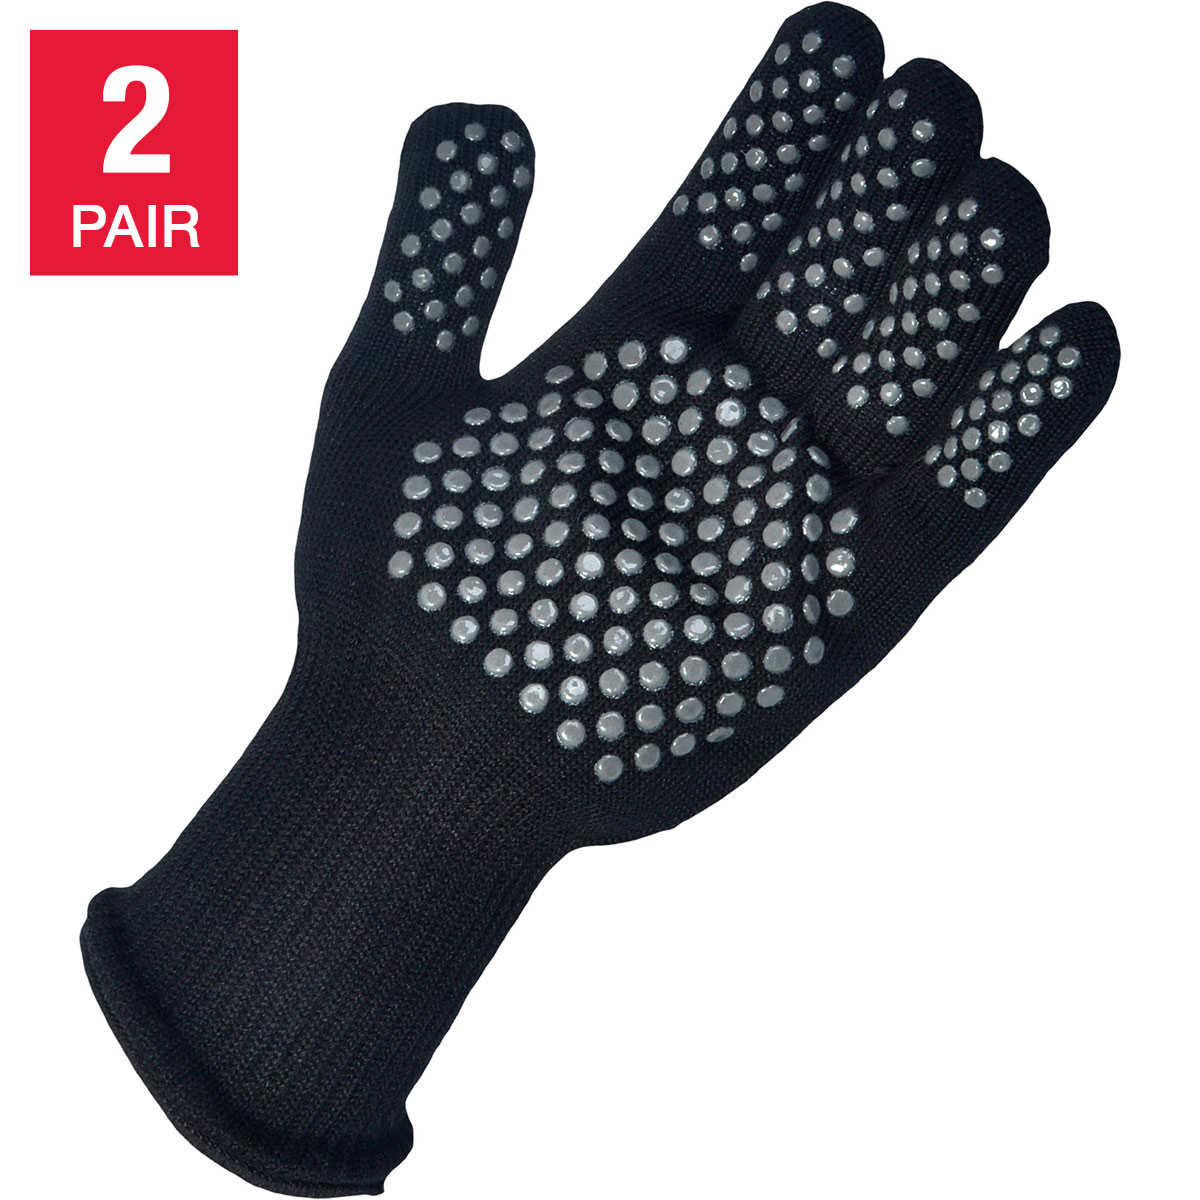 White Baking Hand Gloves, Size: Free Size